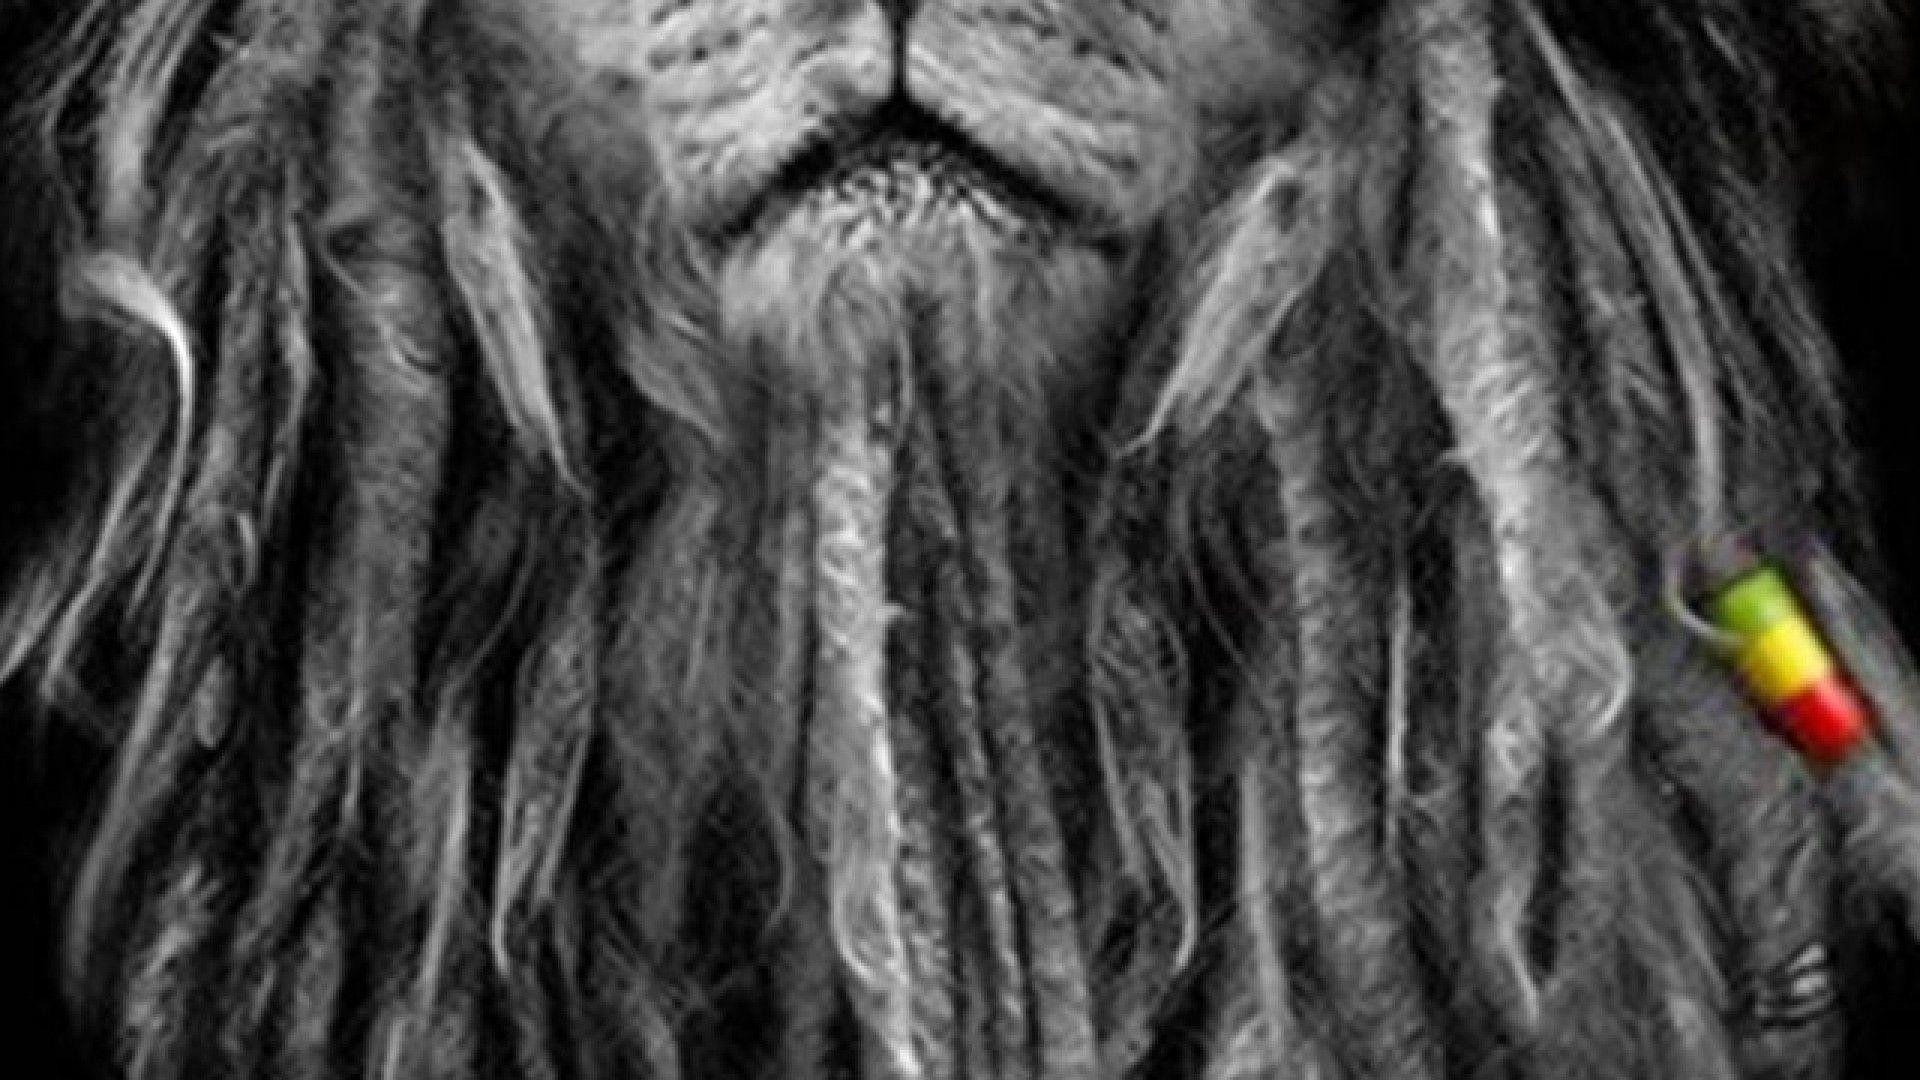 Rasta Lion Wallpaper